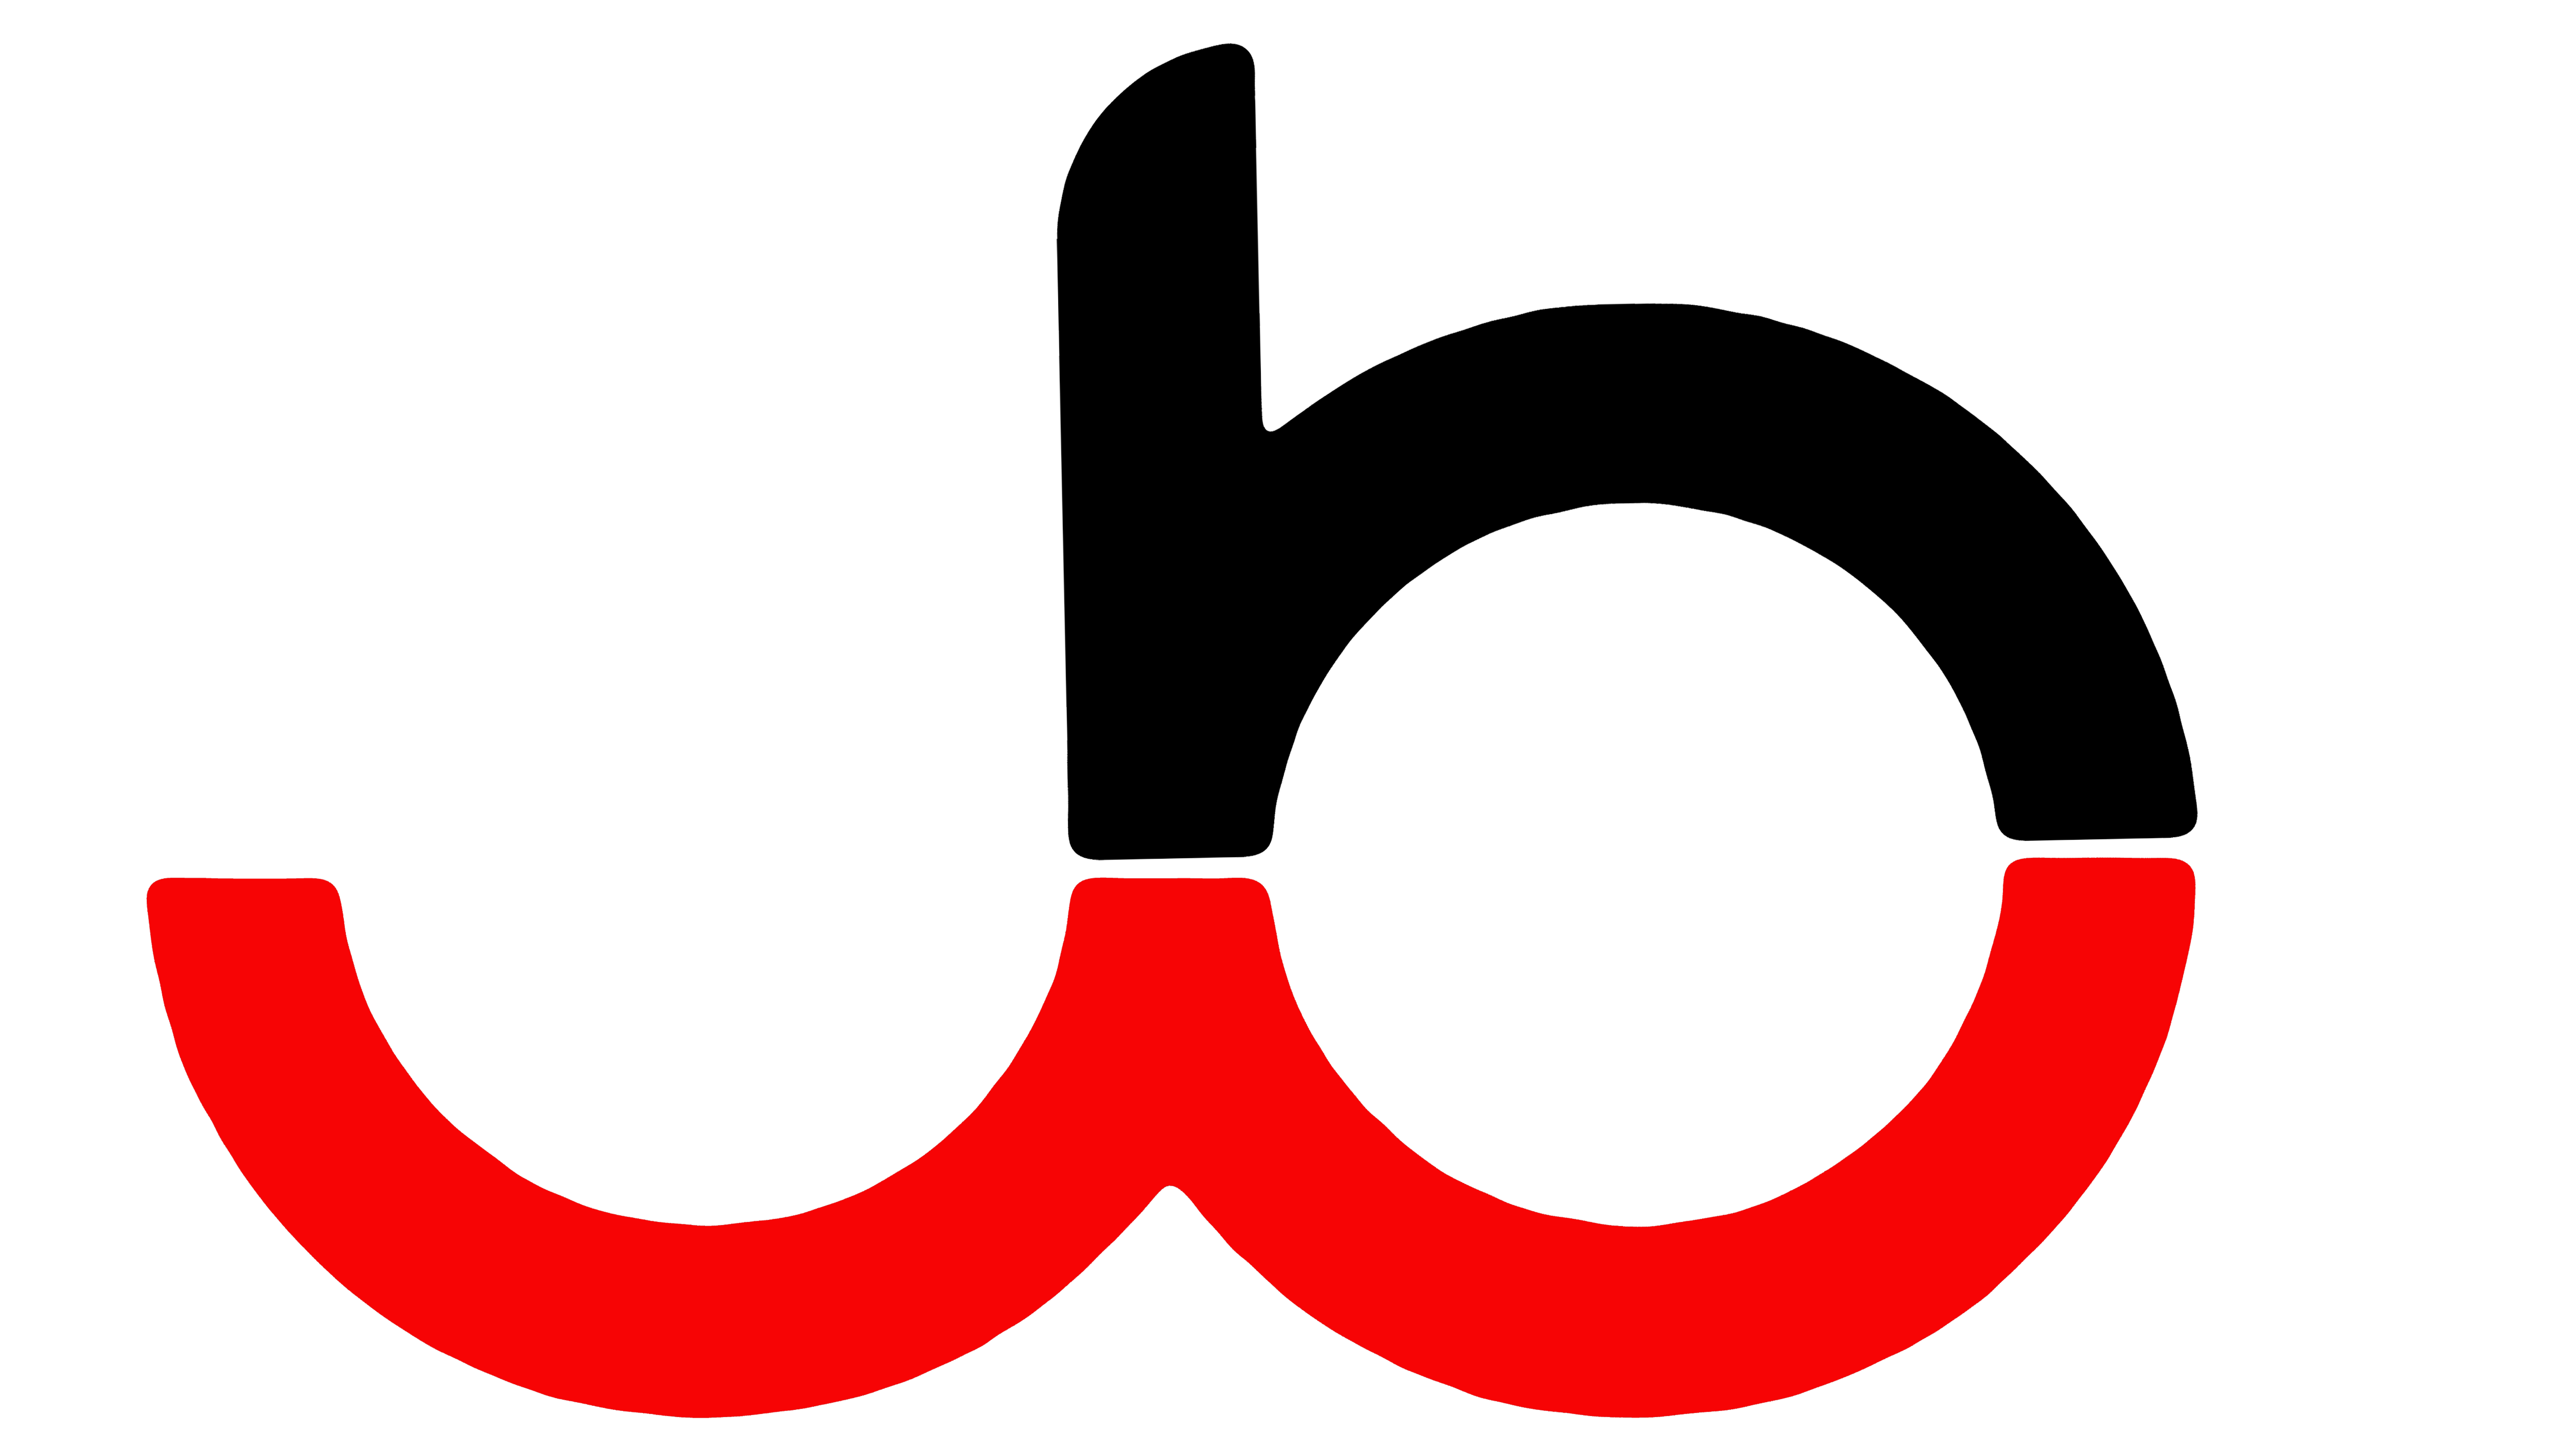 Cynic brand logo